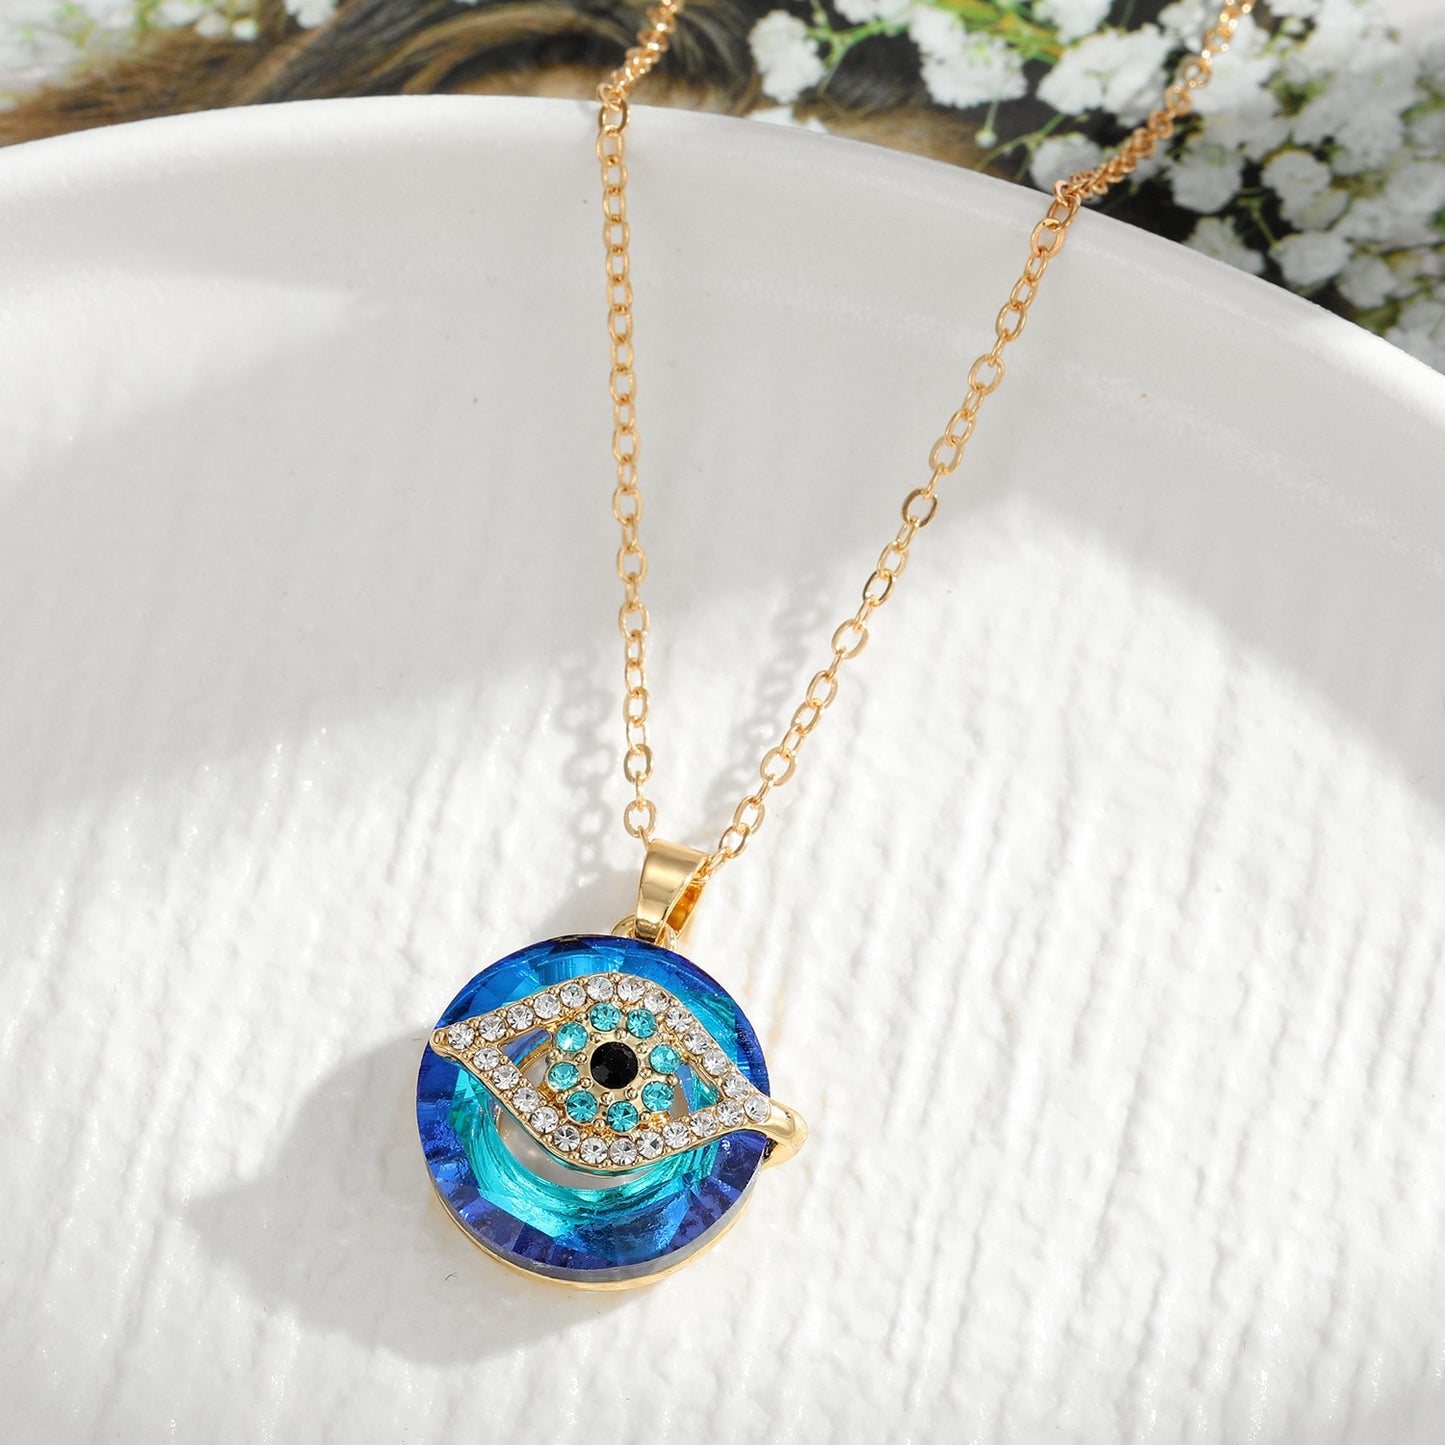 Fashion Evil Eye Pendant Necklaces for Women Men Vintage Crystal Rhinestone Geometric Blue Eye Sweater Chain Necklace Jewelry